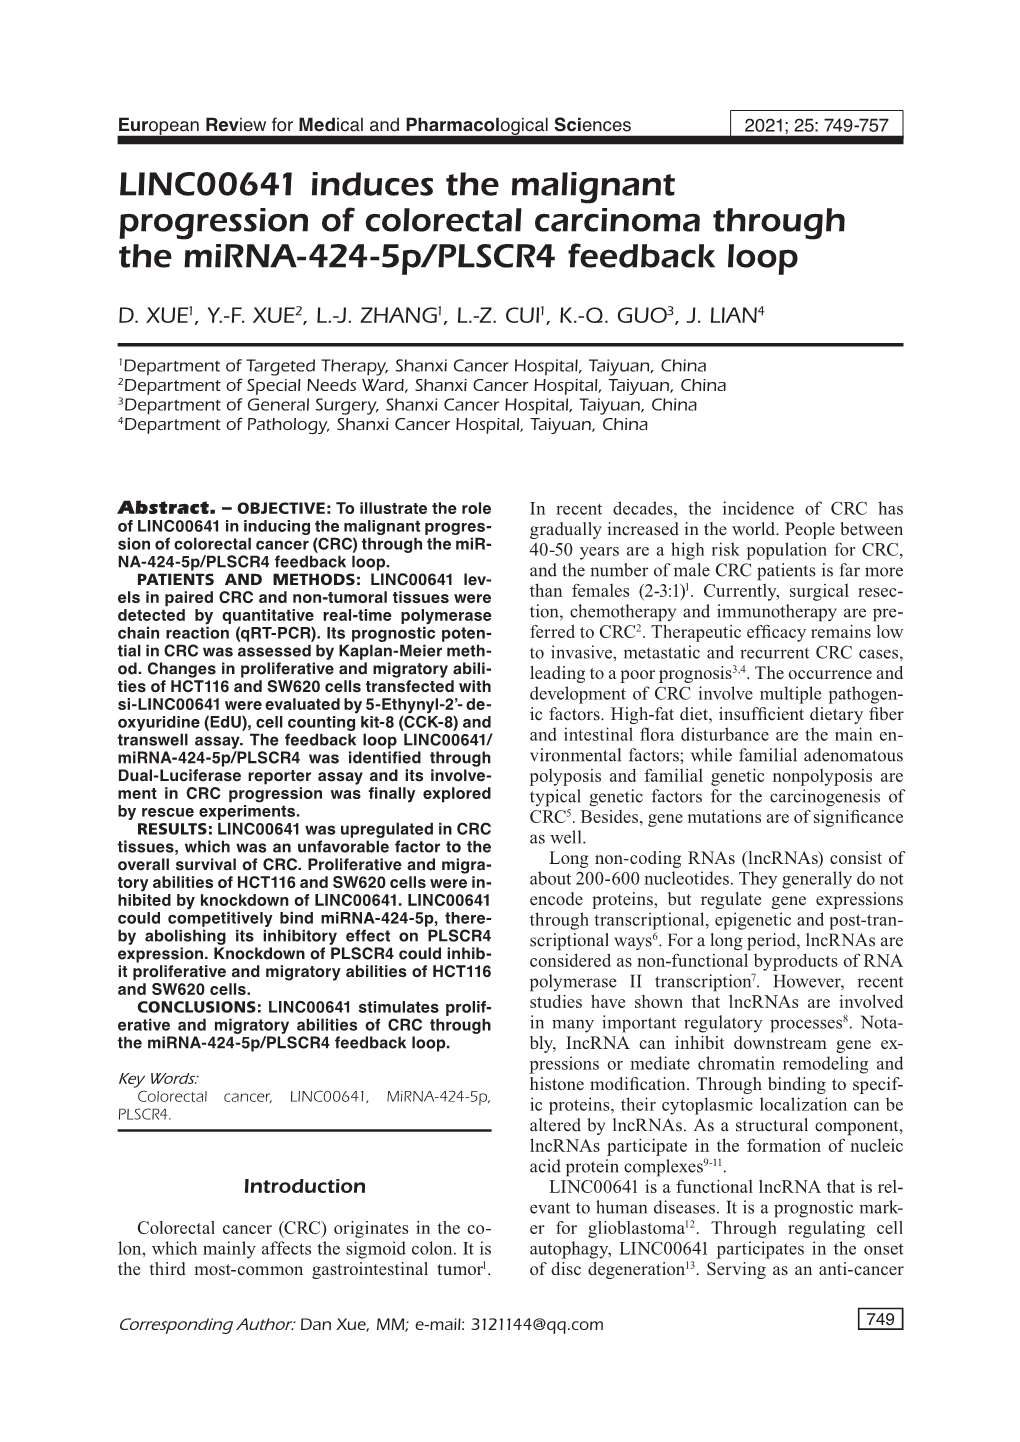 LINC00641 Induces the Malignant Progression of Colorectal Carcinoma Through the Mirna-424-5P/PLSCR4 Feedback Loop